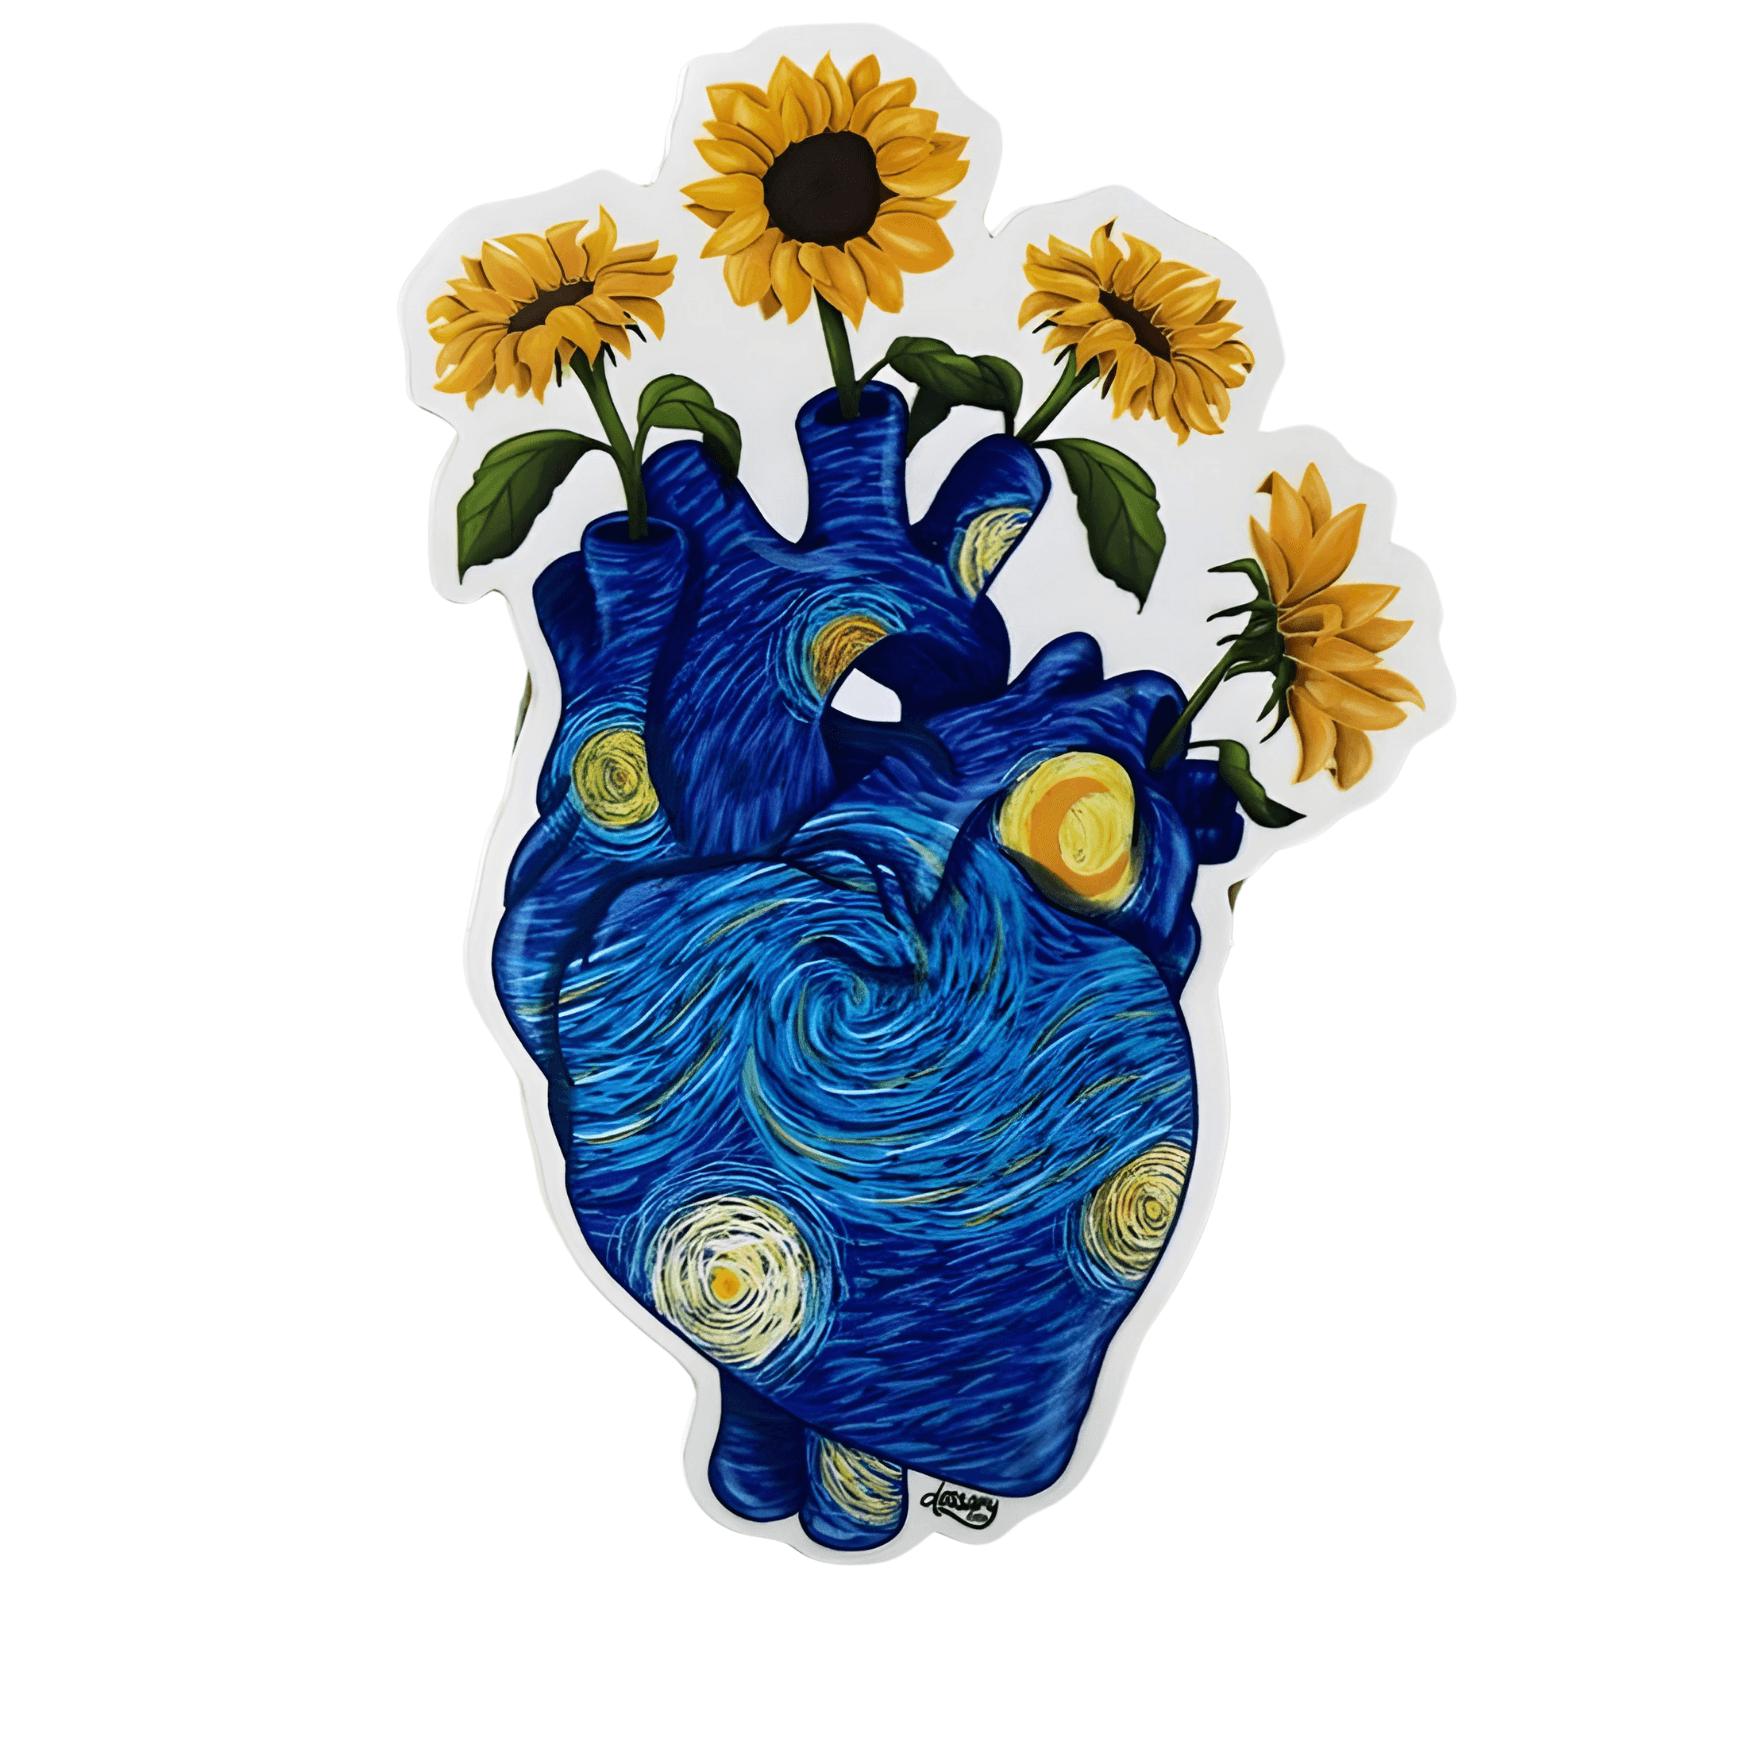 Heart of Vincent Vanh Gogh sticker 6cm